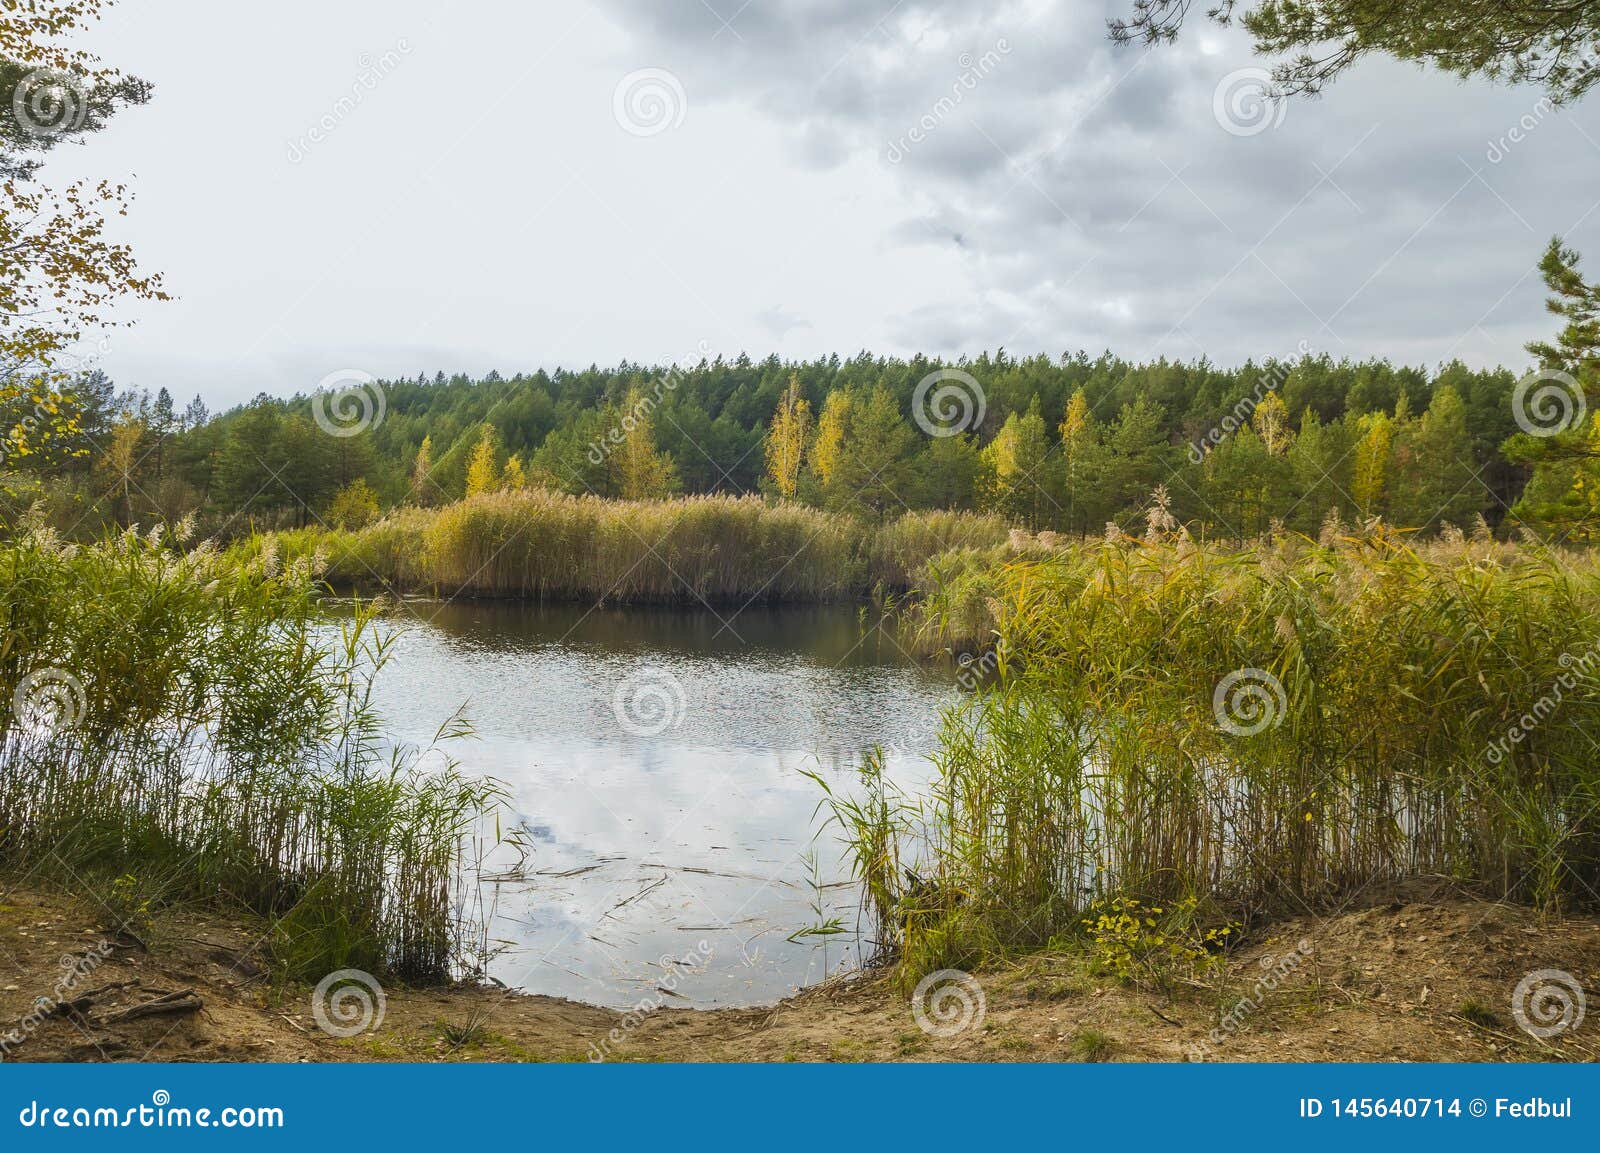 https://thumbs.dreamstime.com/z/small-lake-forest-autumn-season-145640714.jpg